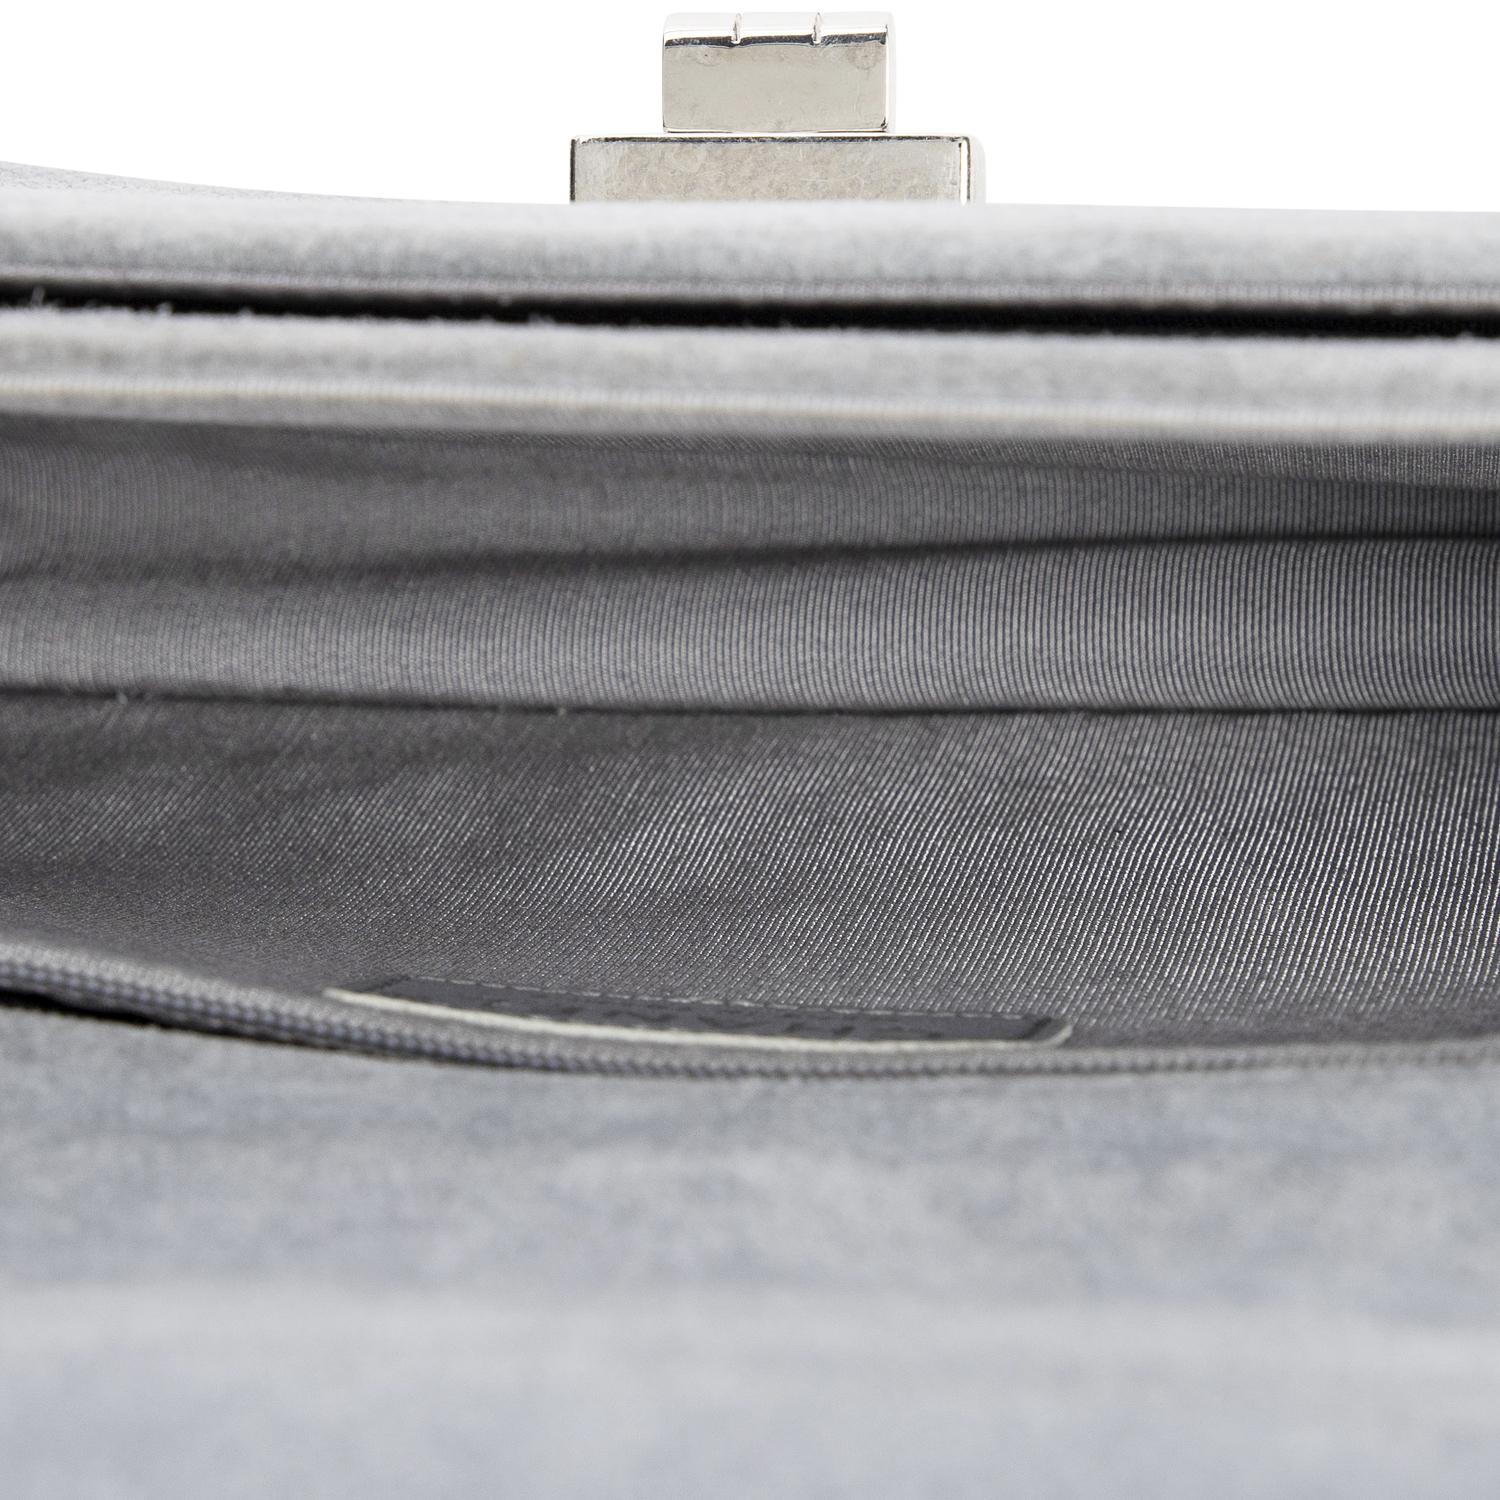 Women's or Men's Chanel 2005 Limited Edition Grey Suede Wild Stitch Shoulder Bag For Sale